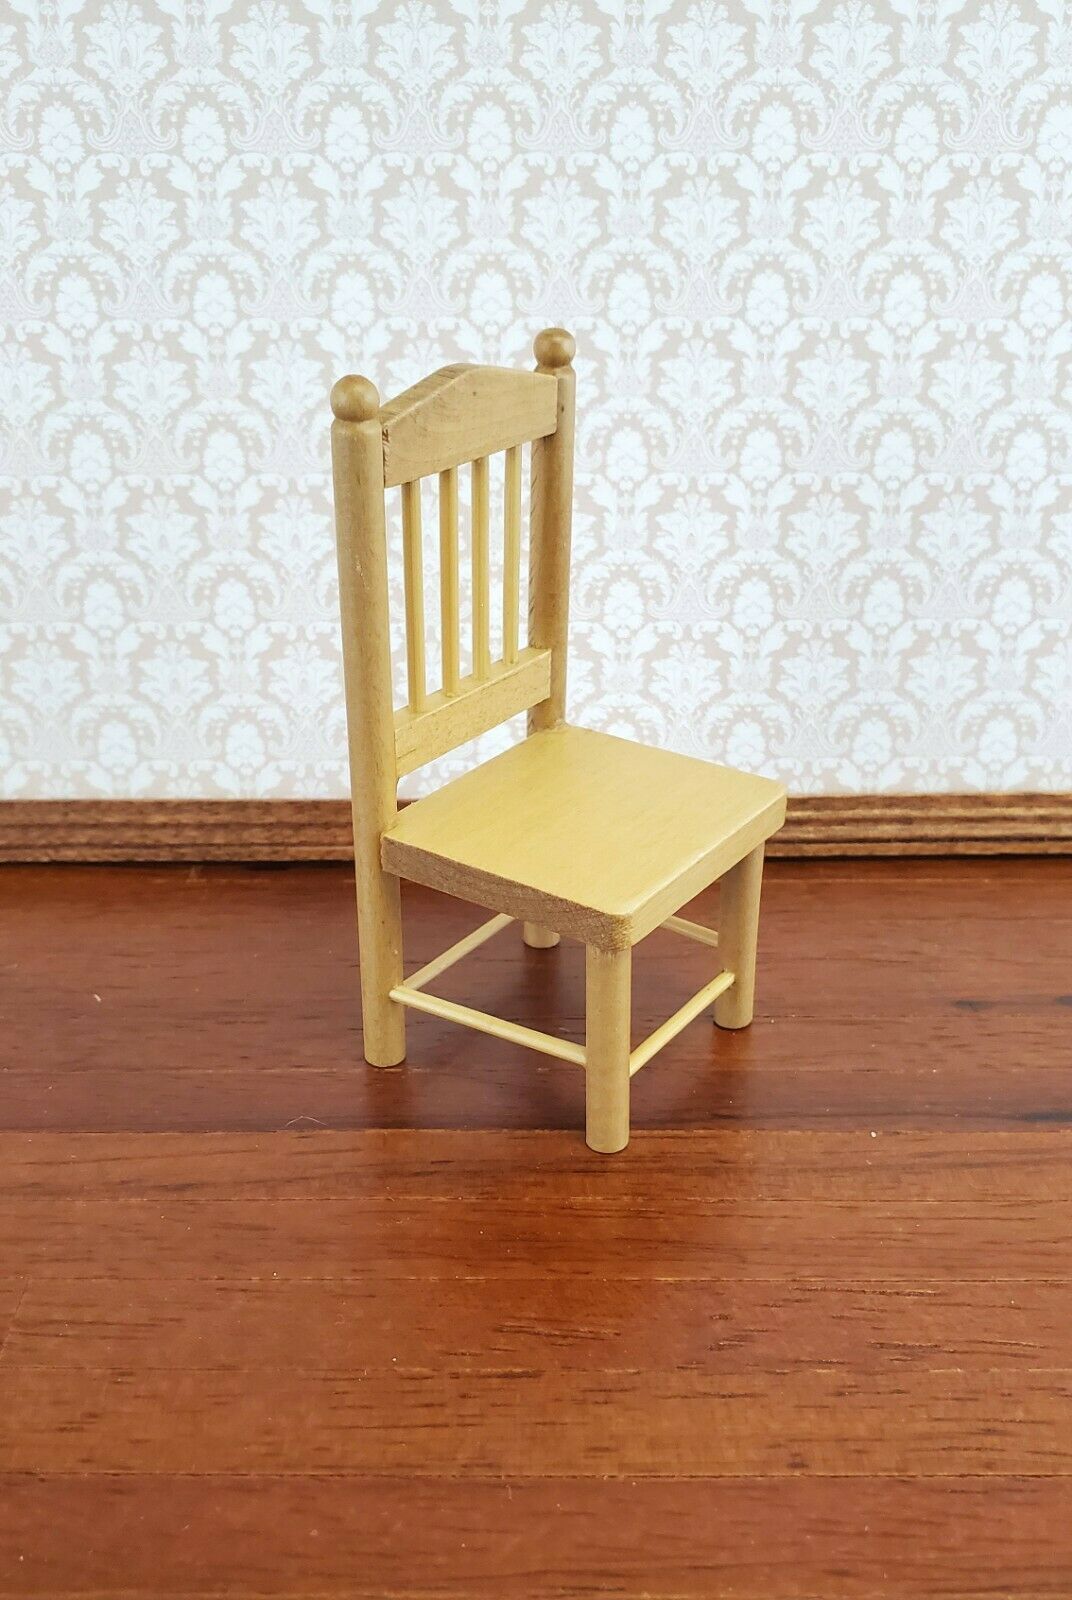 Dollhouse Miniature Small Chair Light Oak Wood 1:12 Scale 3 1/4" tall - Miniature Crush